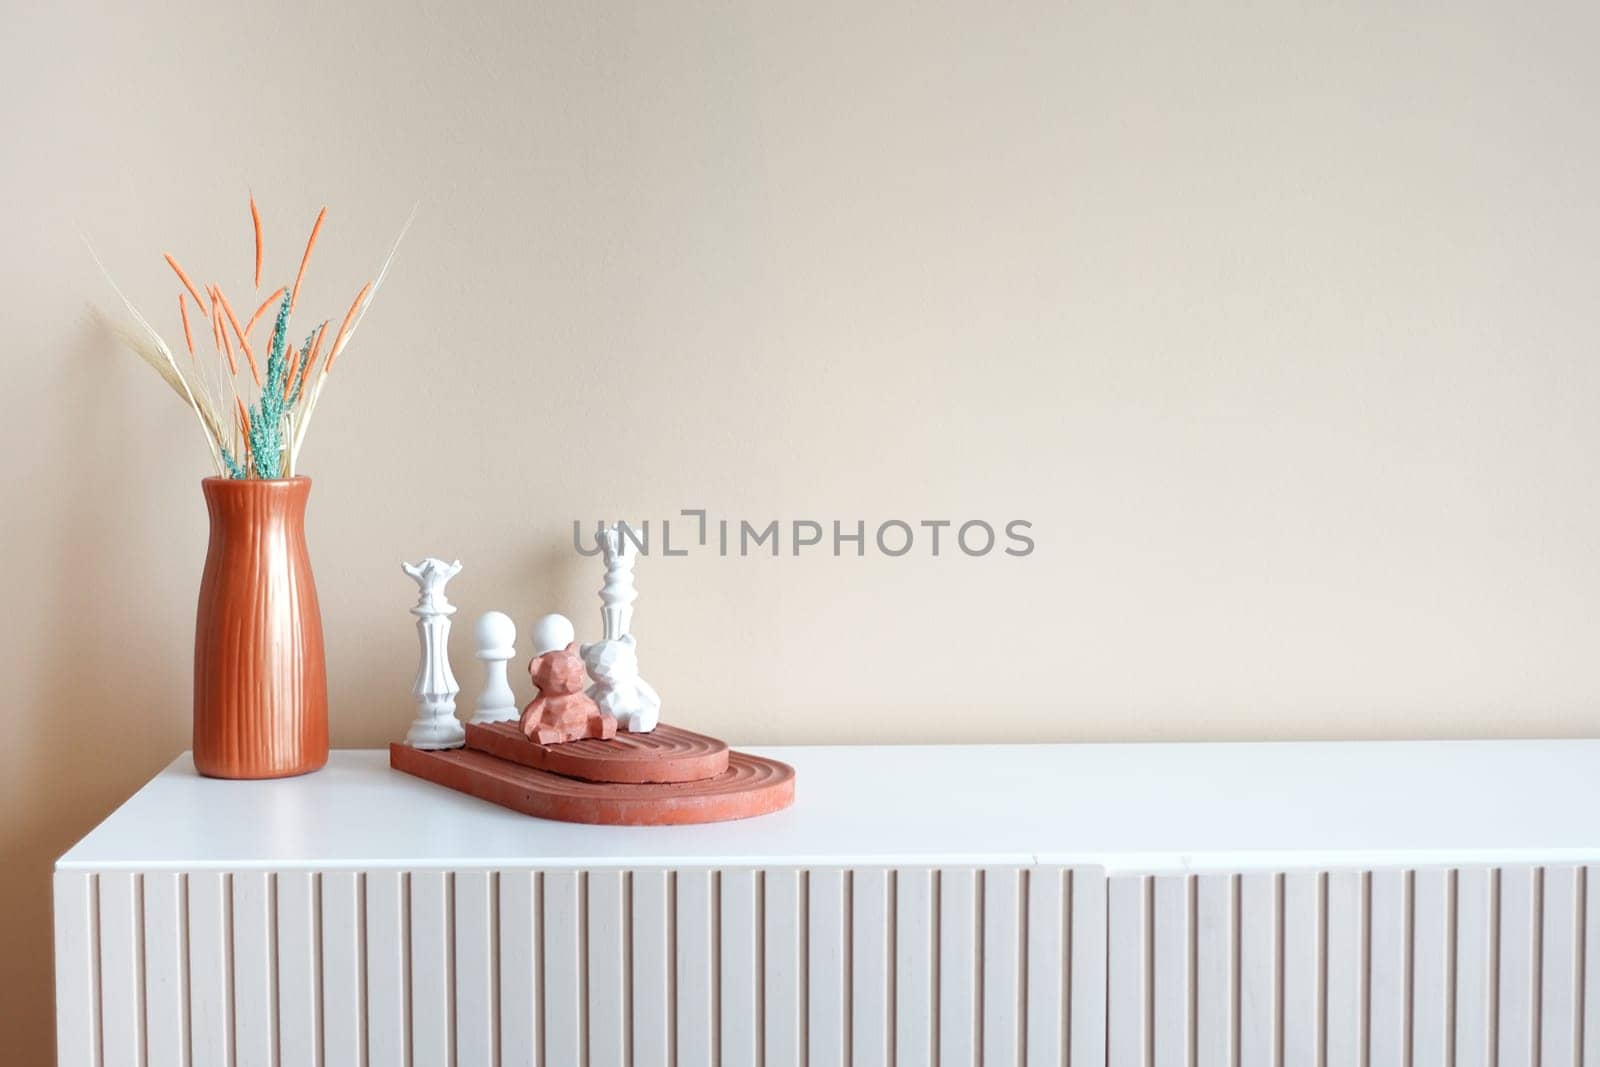 home interior decoration against light orange color wall